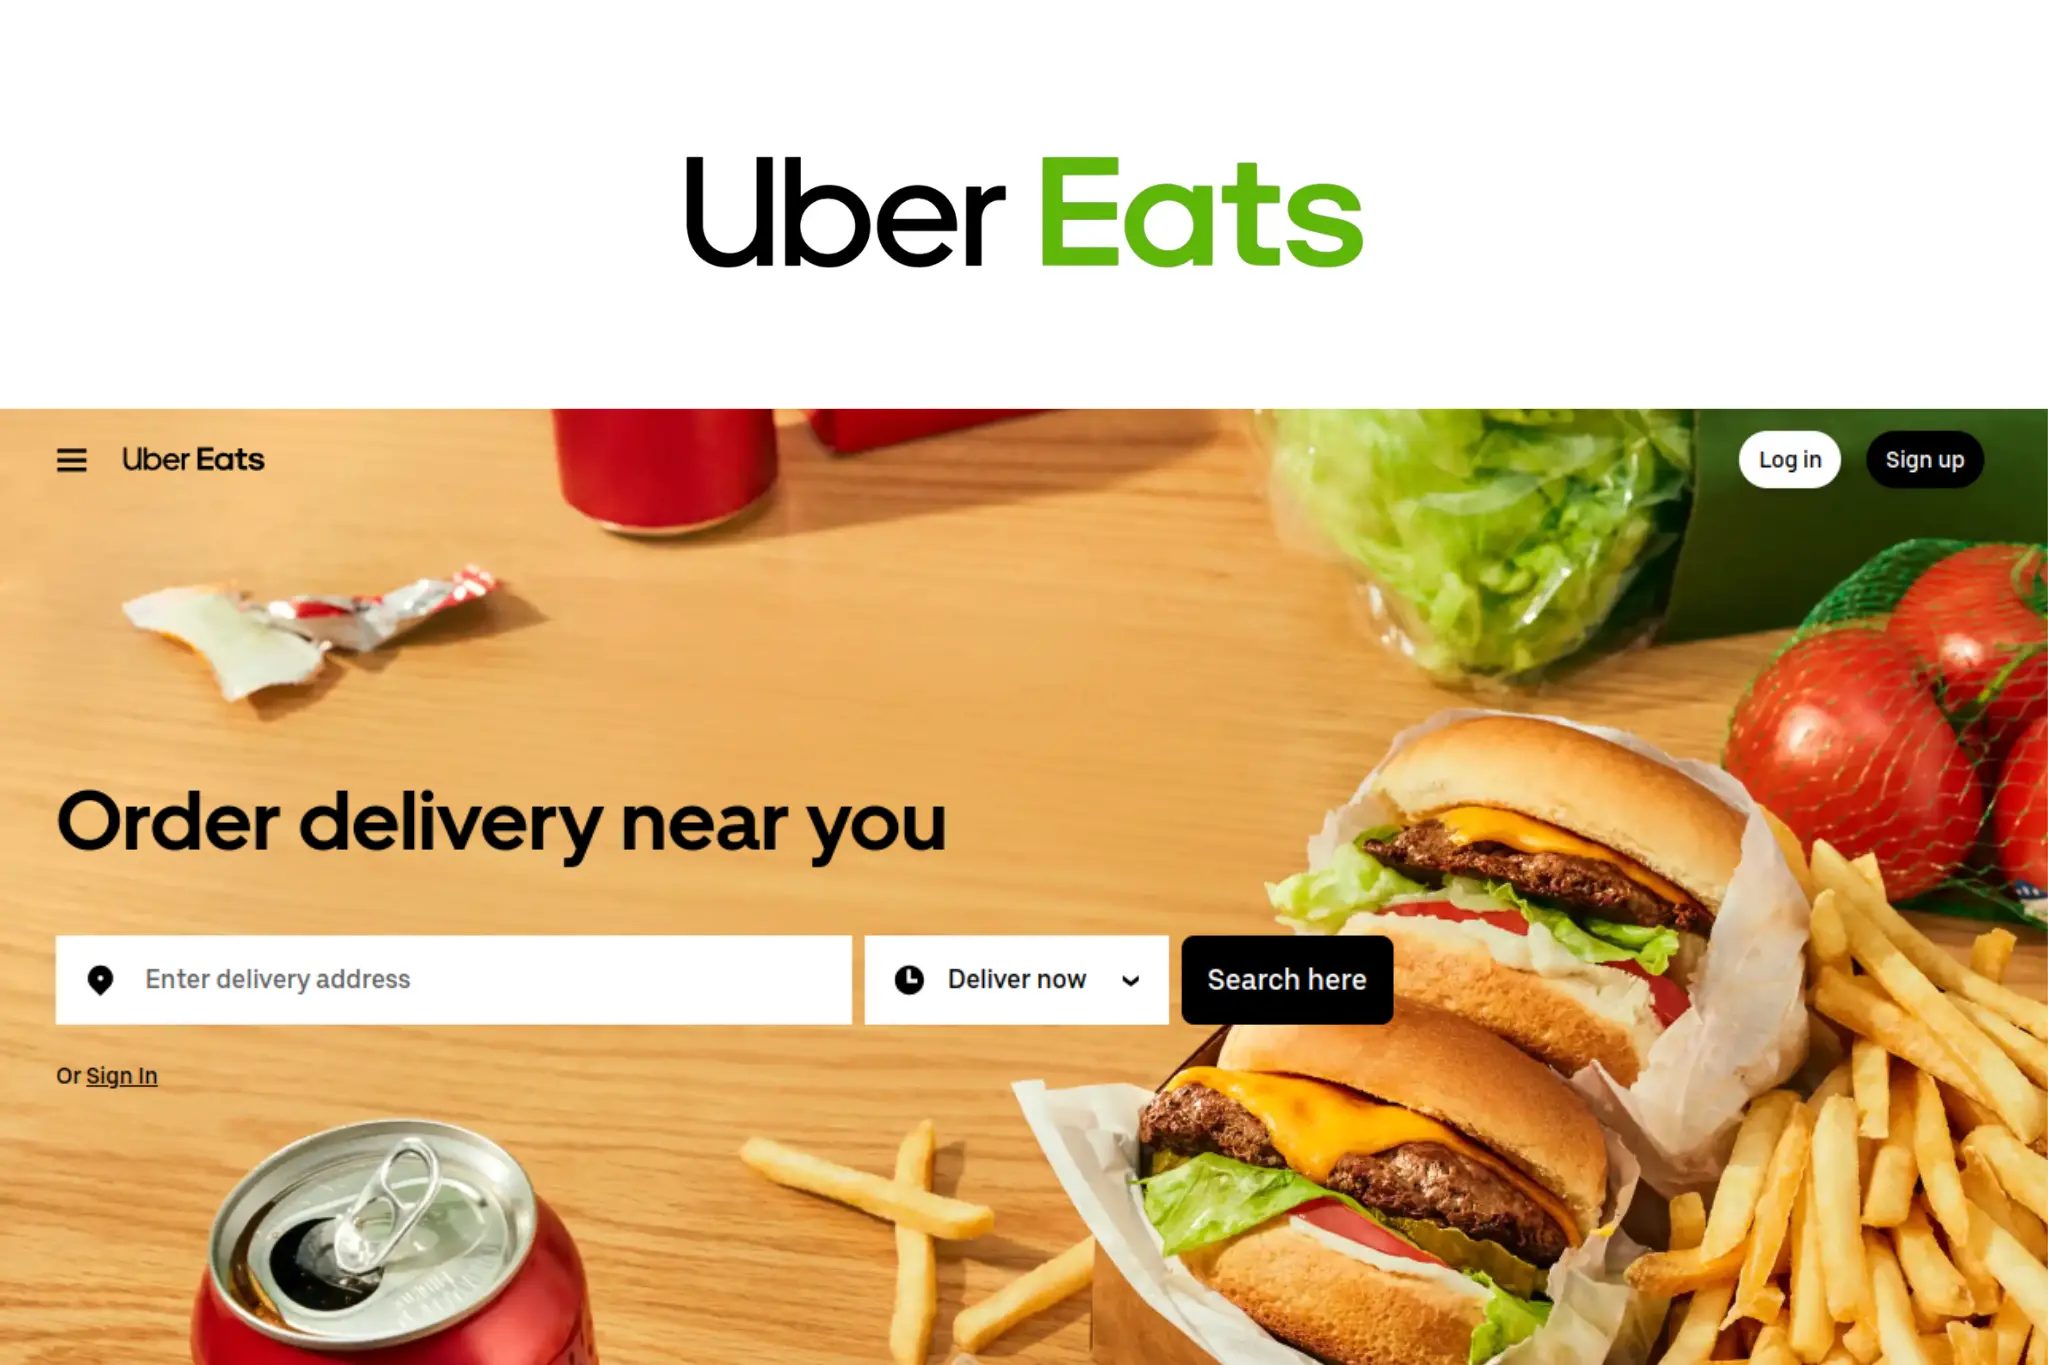 Uber eats dashboard with logo